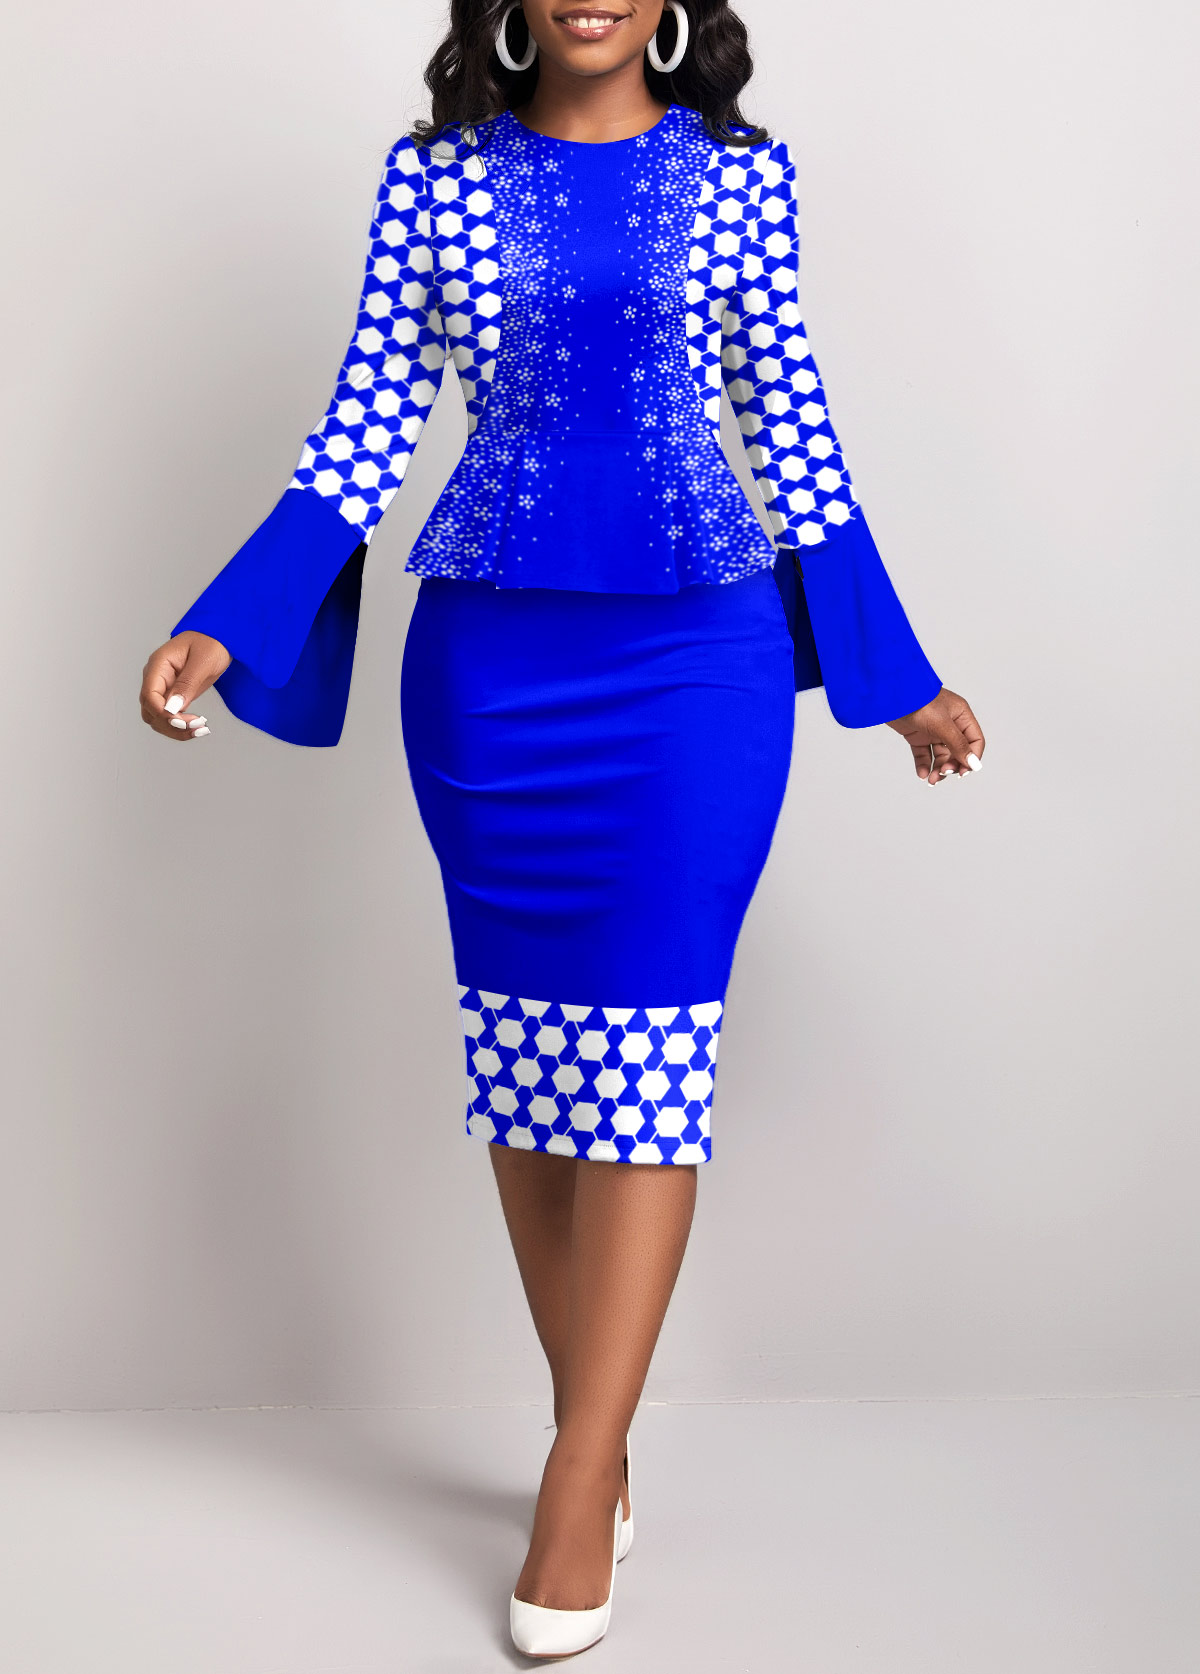 Geometric Print Fake 2in1 Royal Blue Bodycon Dress